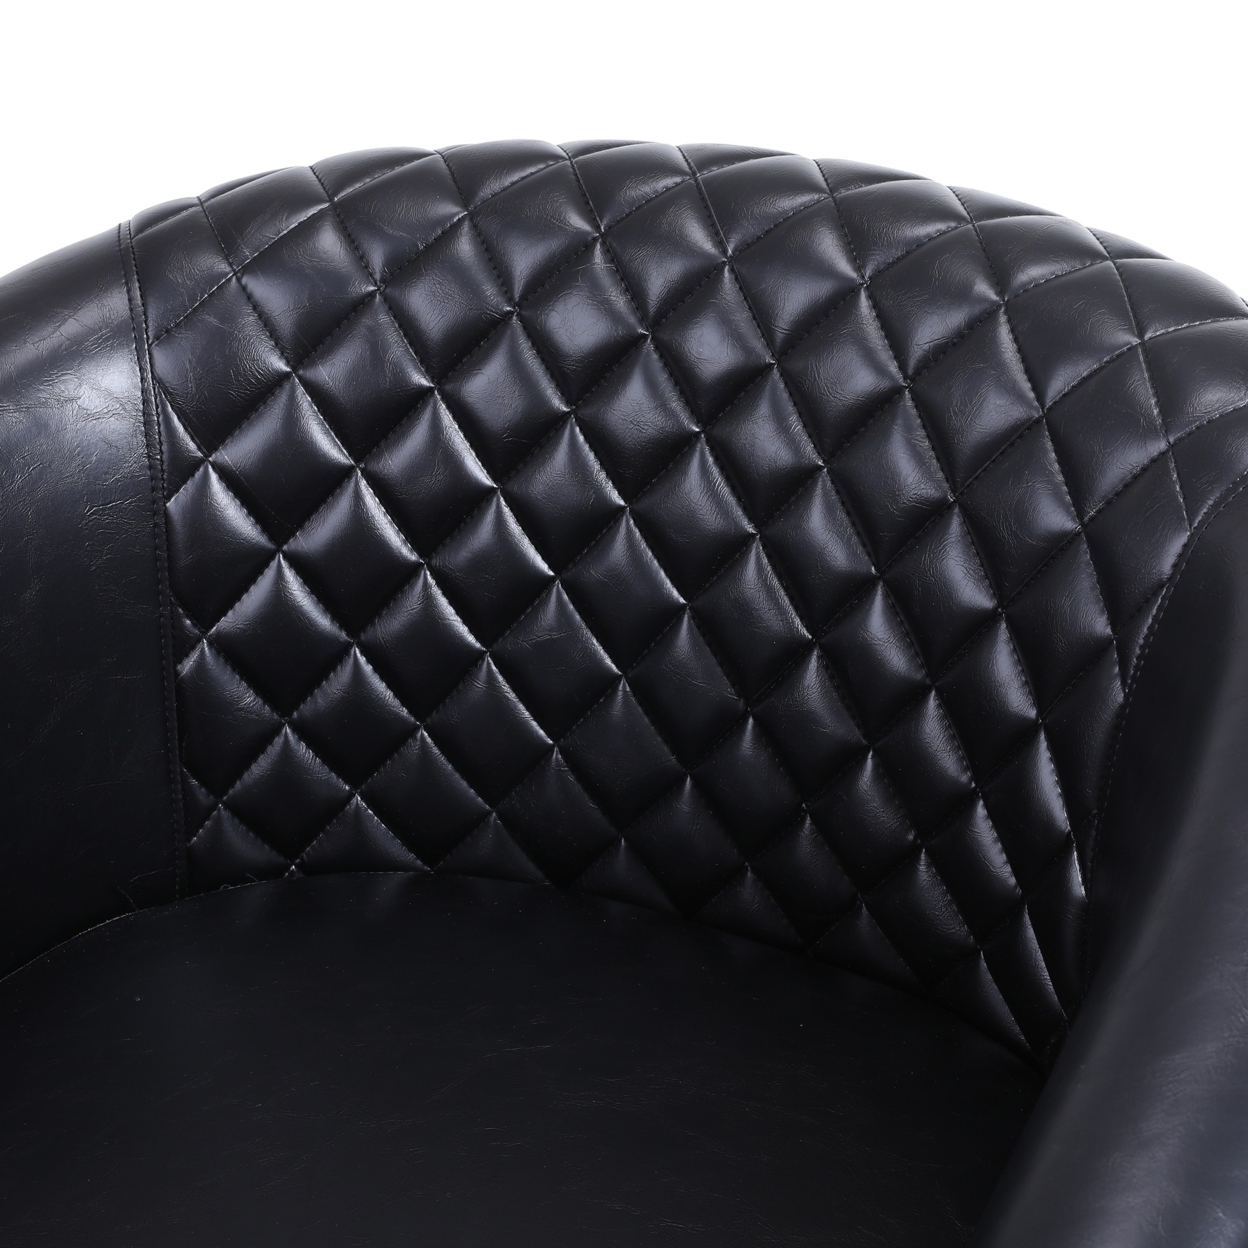 Leatherette Accent Chair With Nailhead Trim And Diamond Stitch, Black- Saltoro Sherpi